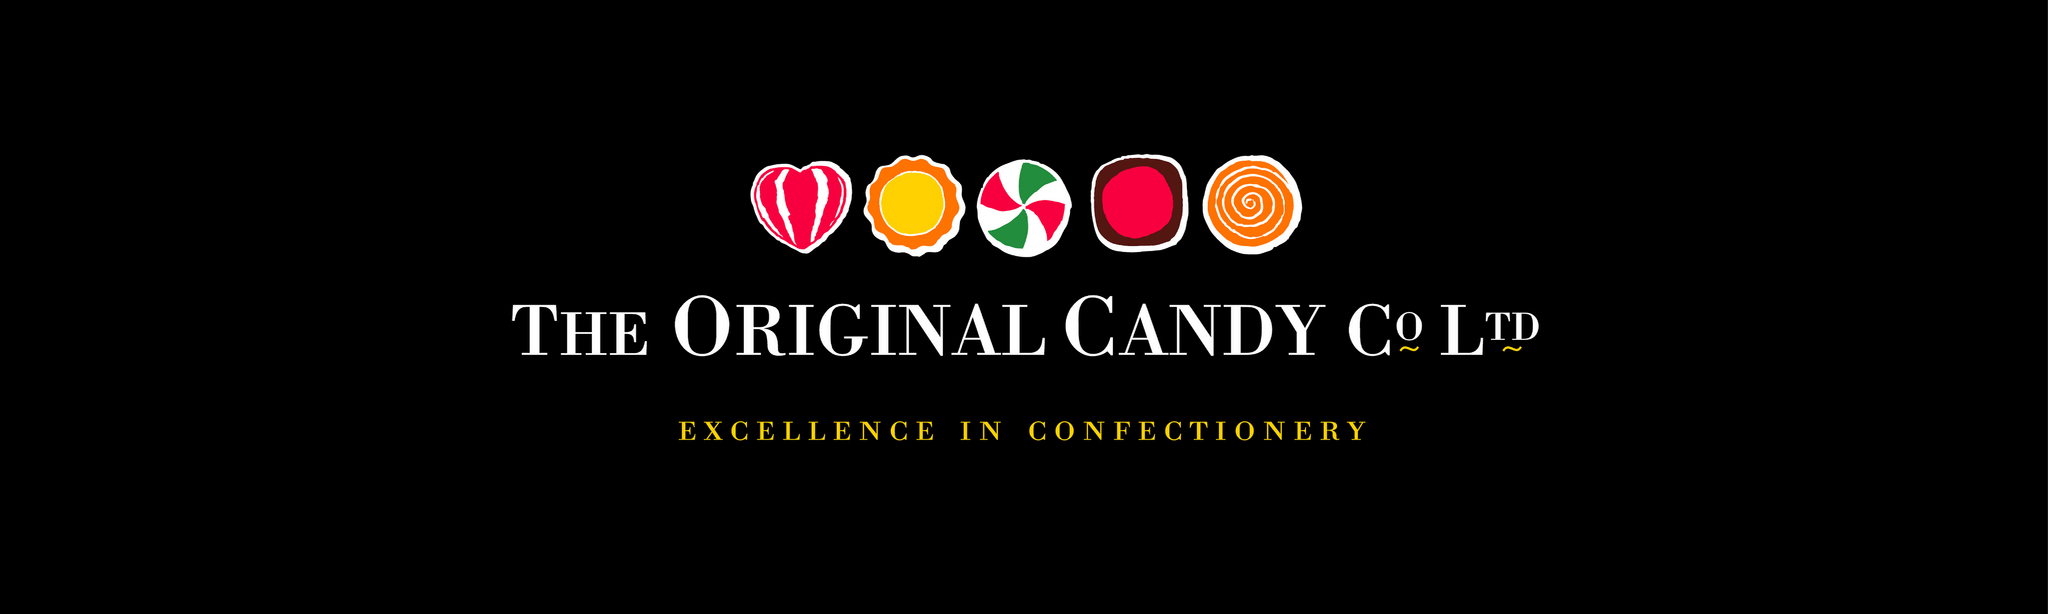 The Original Candy Company Ltd